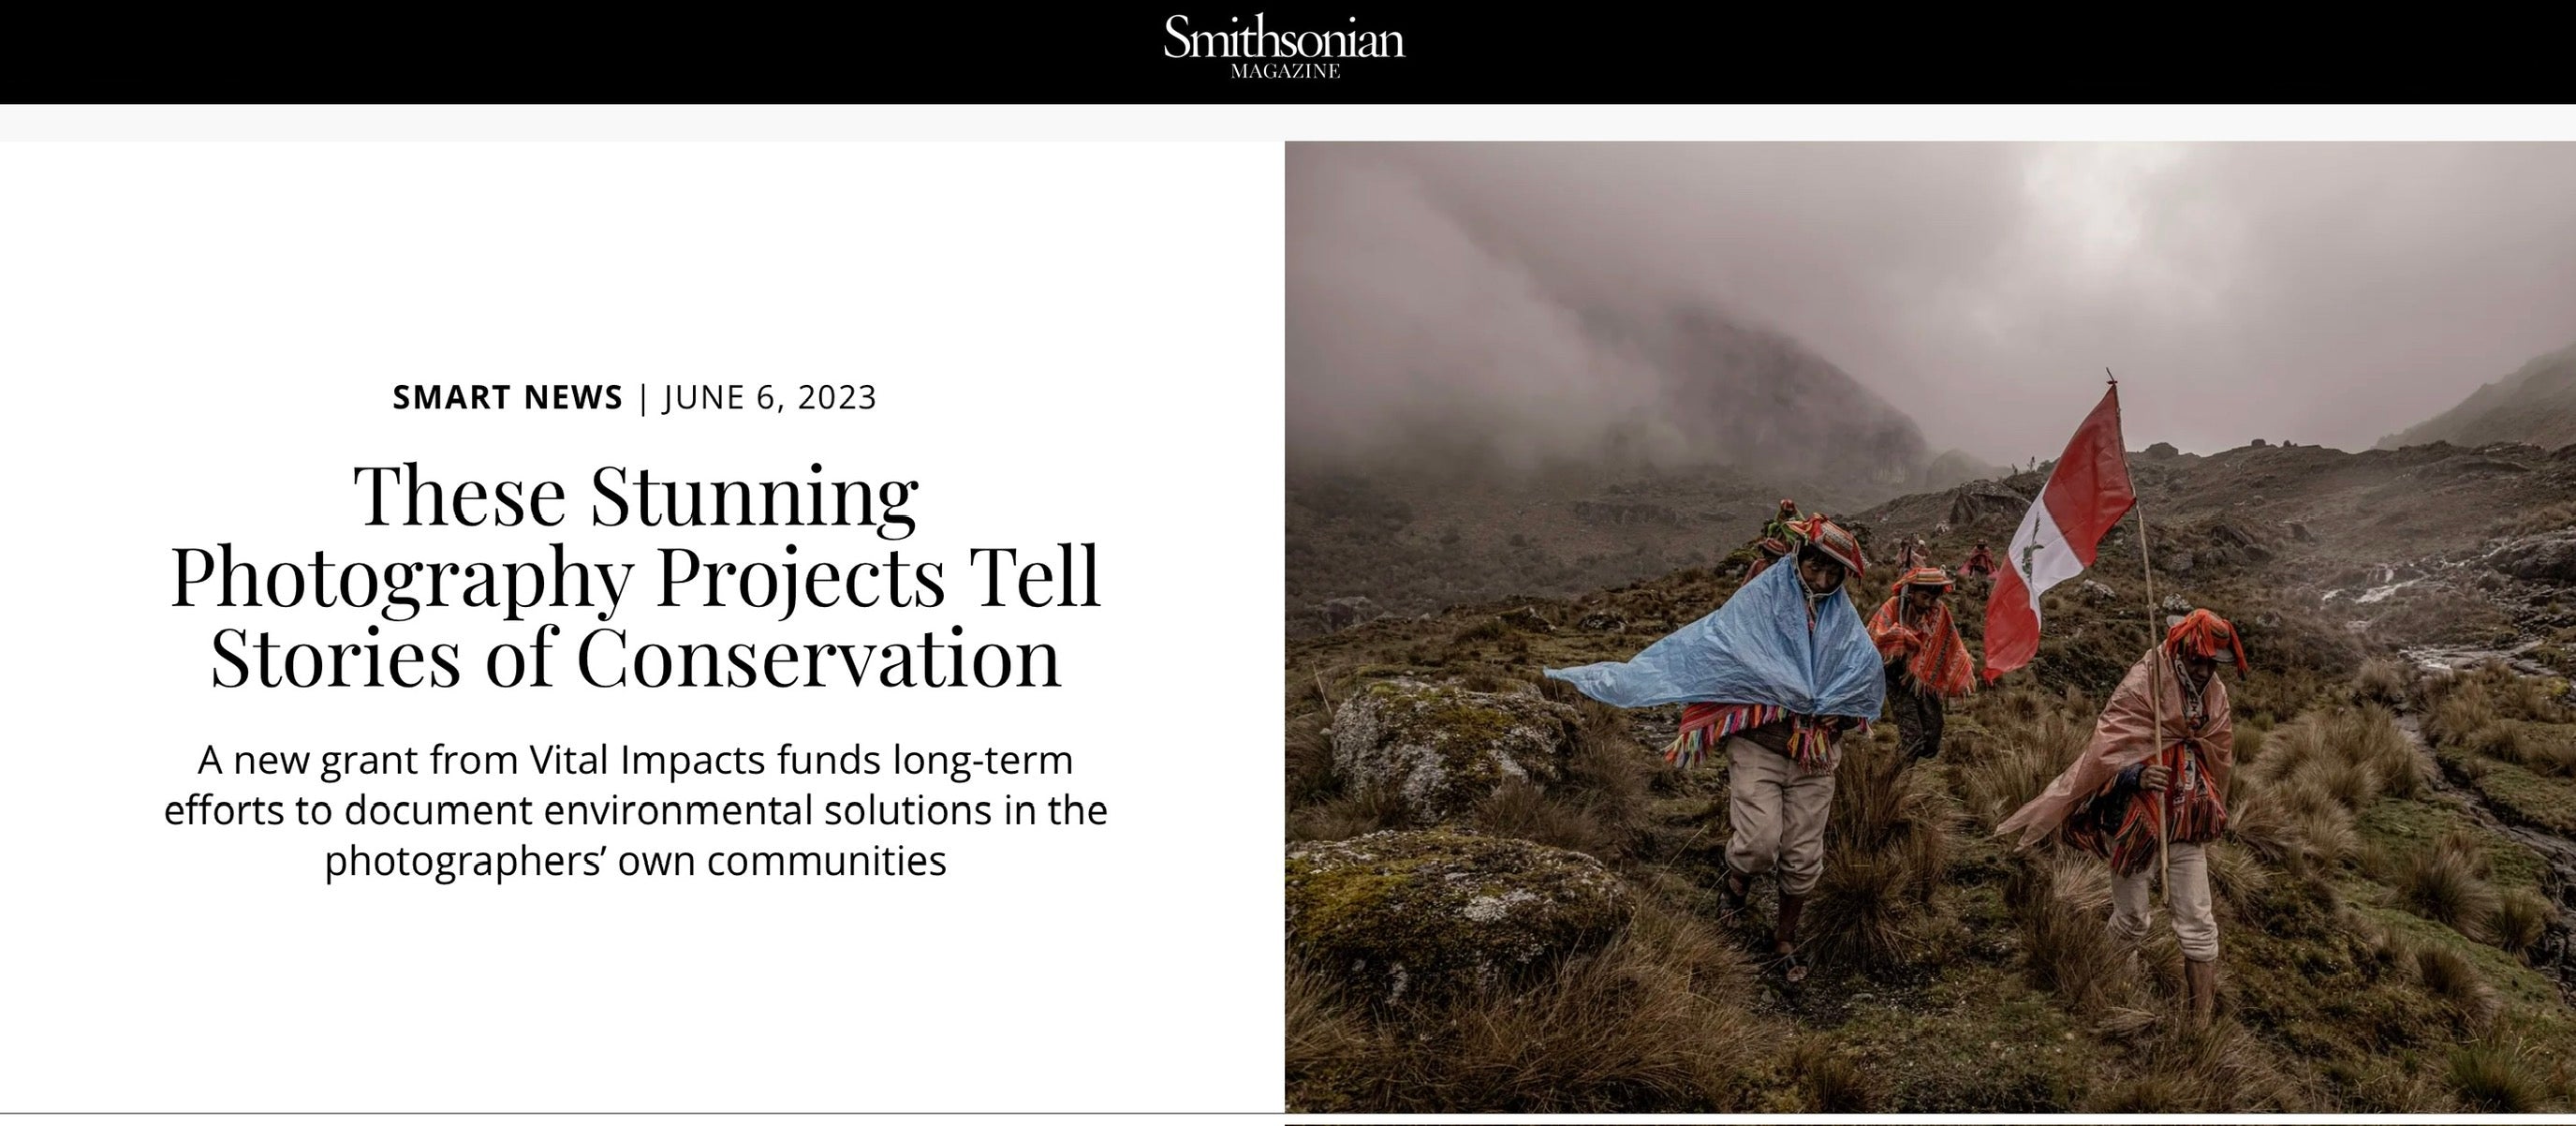 Smithsonian Magazine Highlights Vital Impacts Environmental Grant Winners